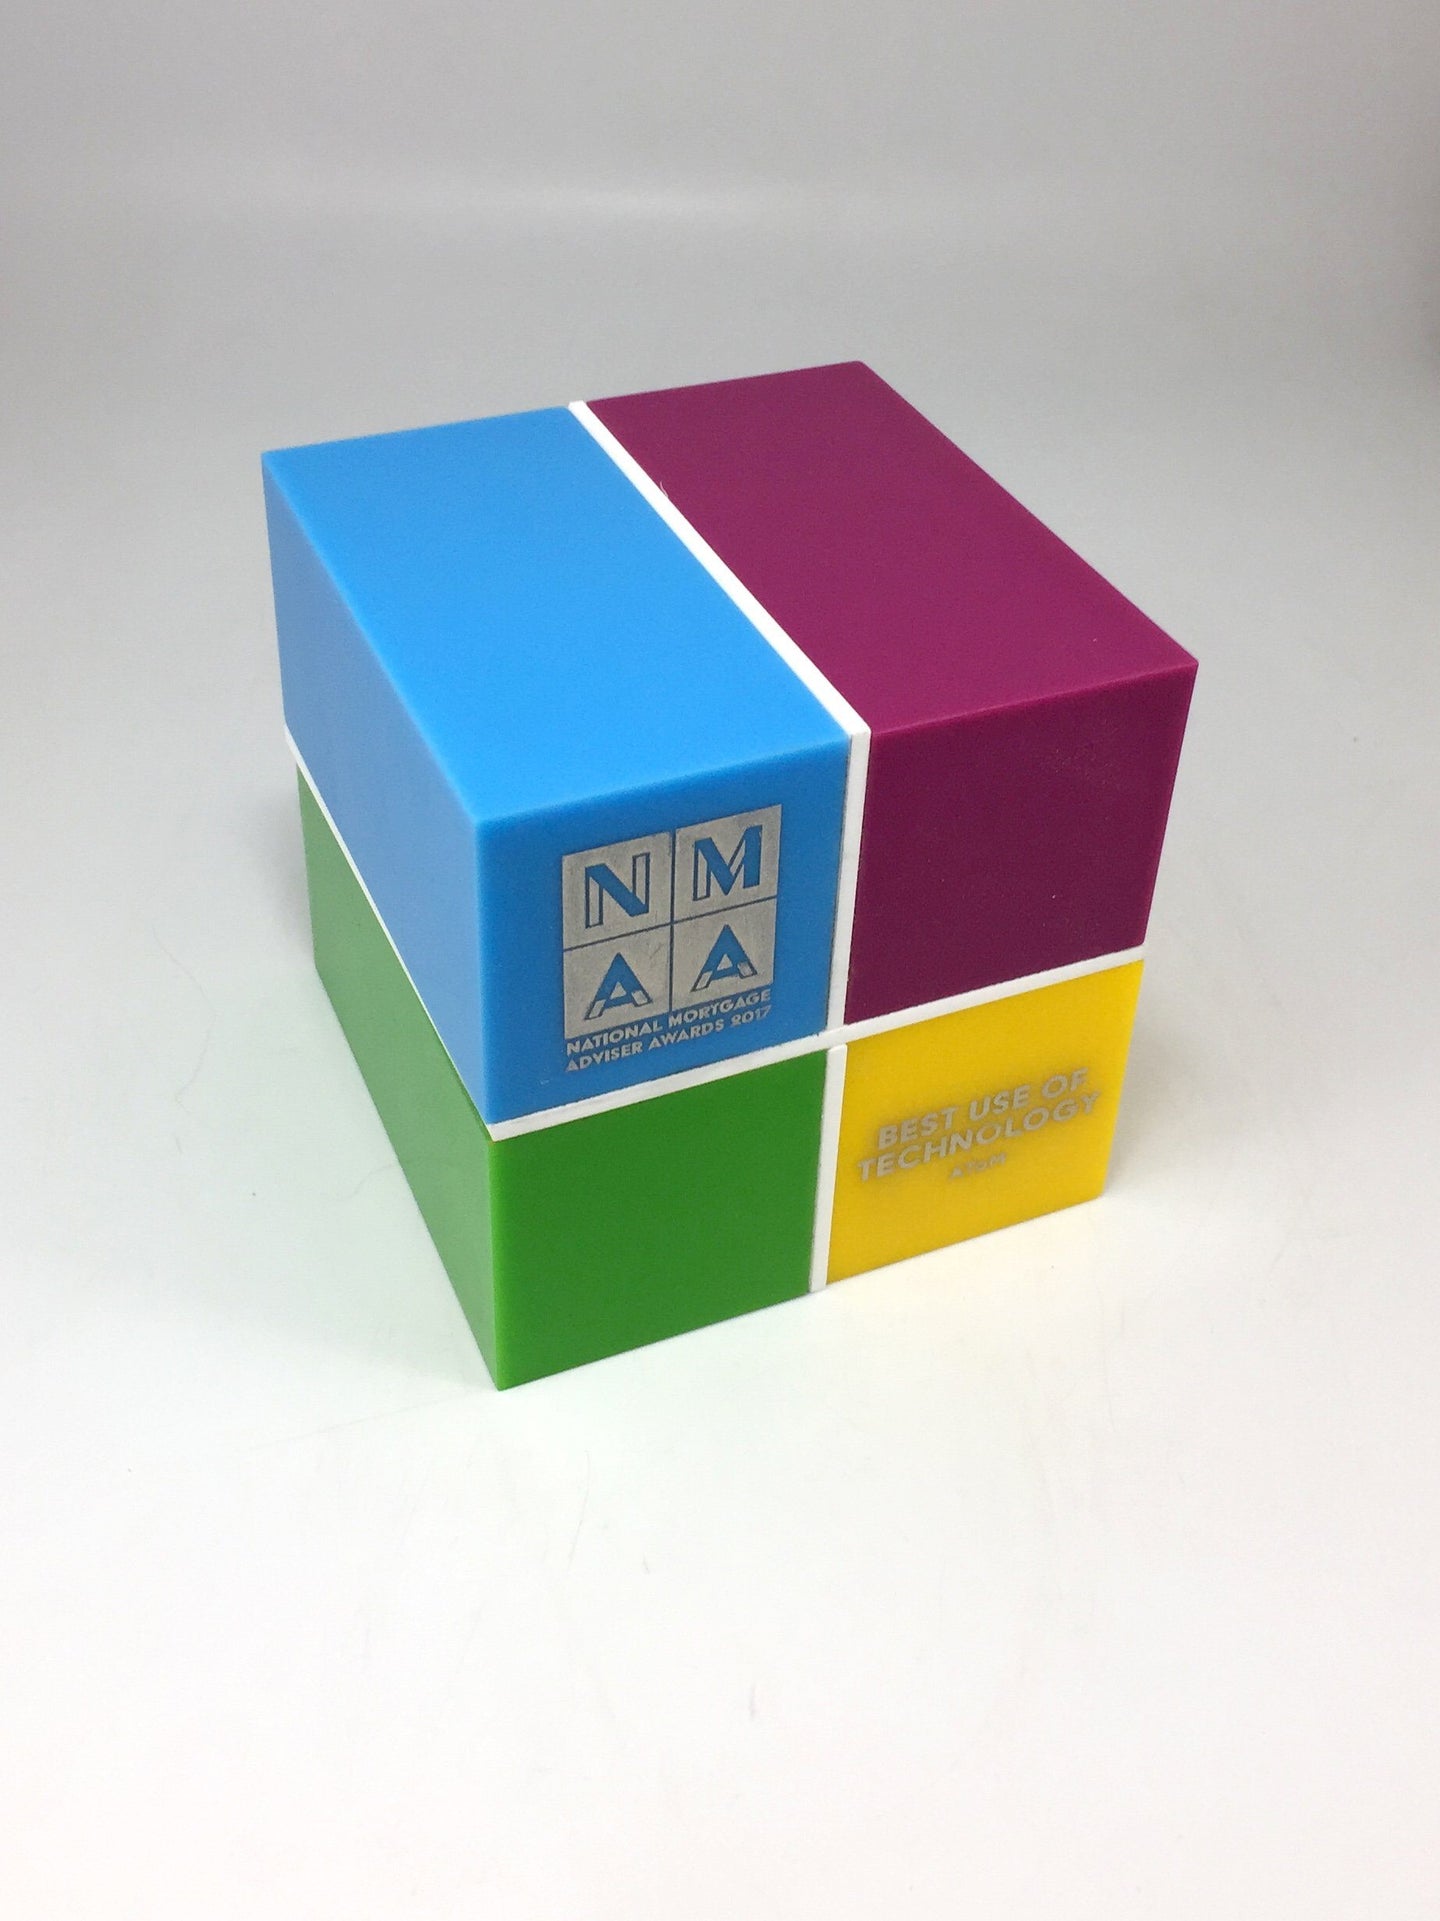 Pop Art Coloured Perspex Block